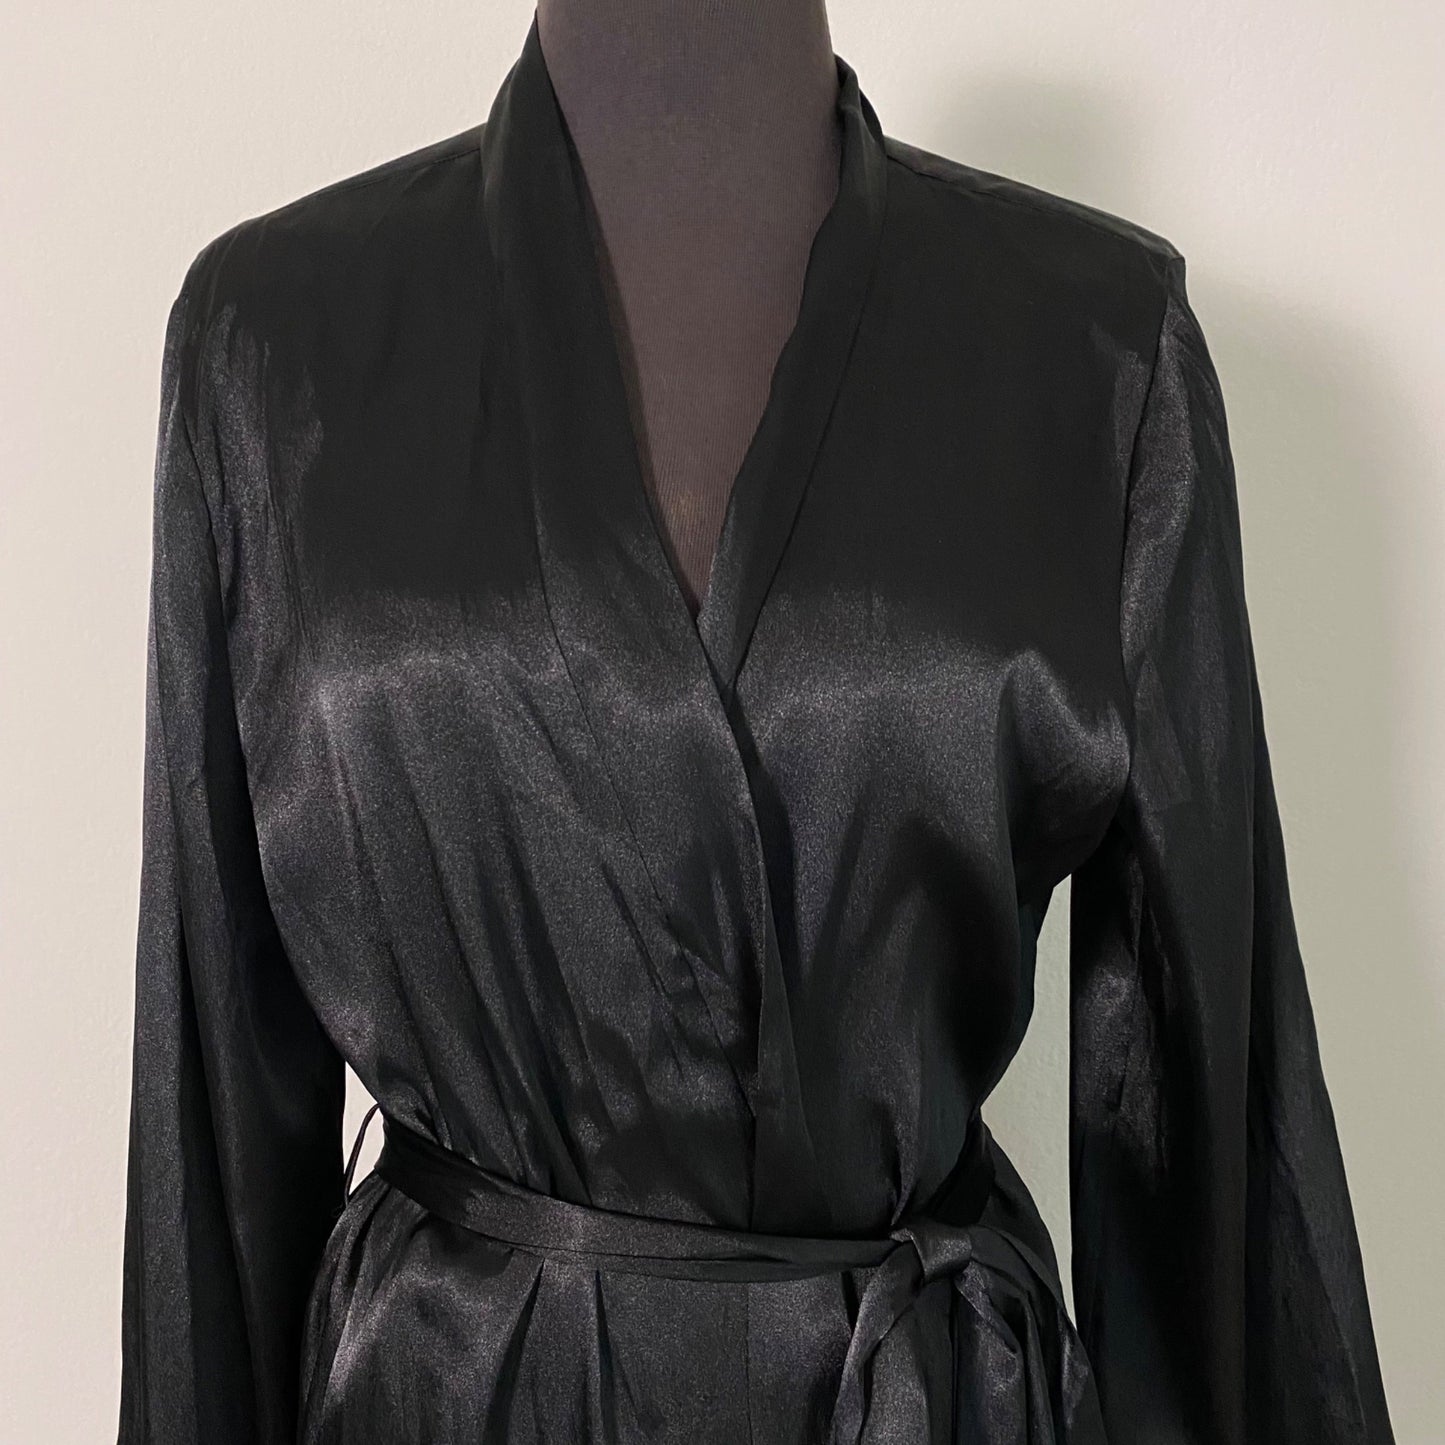 Gilligan & Omalley sz S/M black silky belted self tie robe